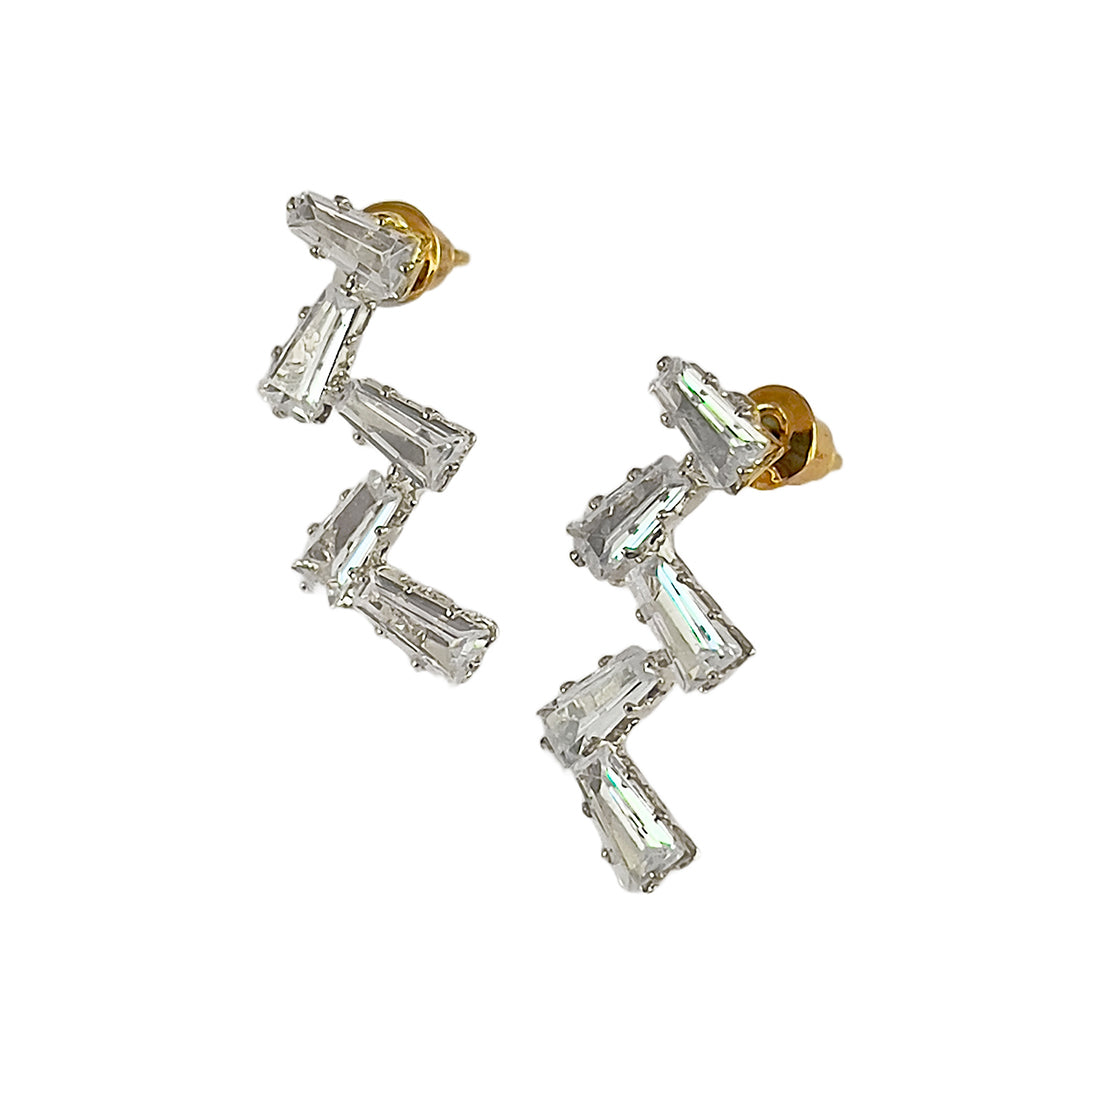 Rhinestone Studded Criss-Cross Gold-Toned Stud Earrings